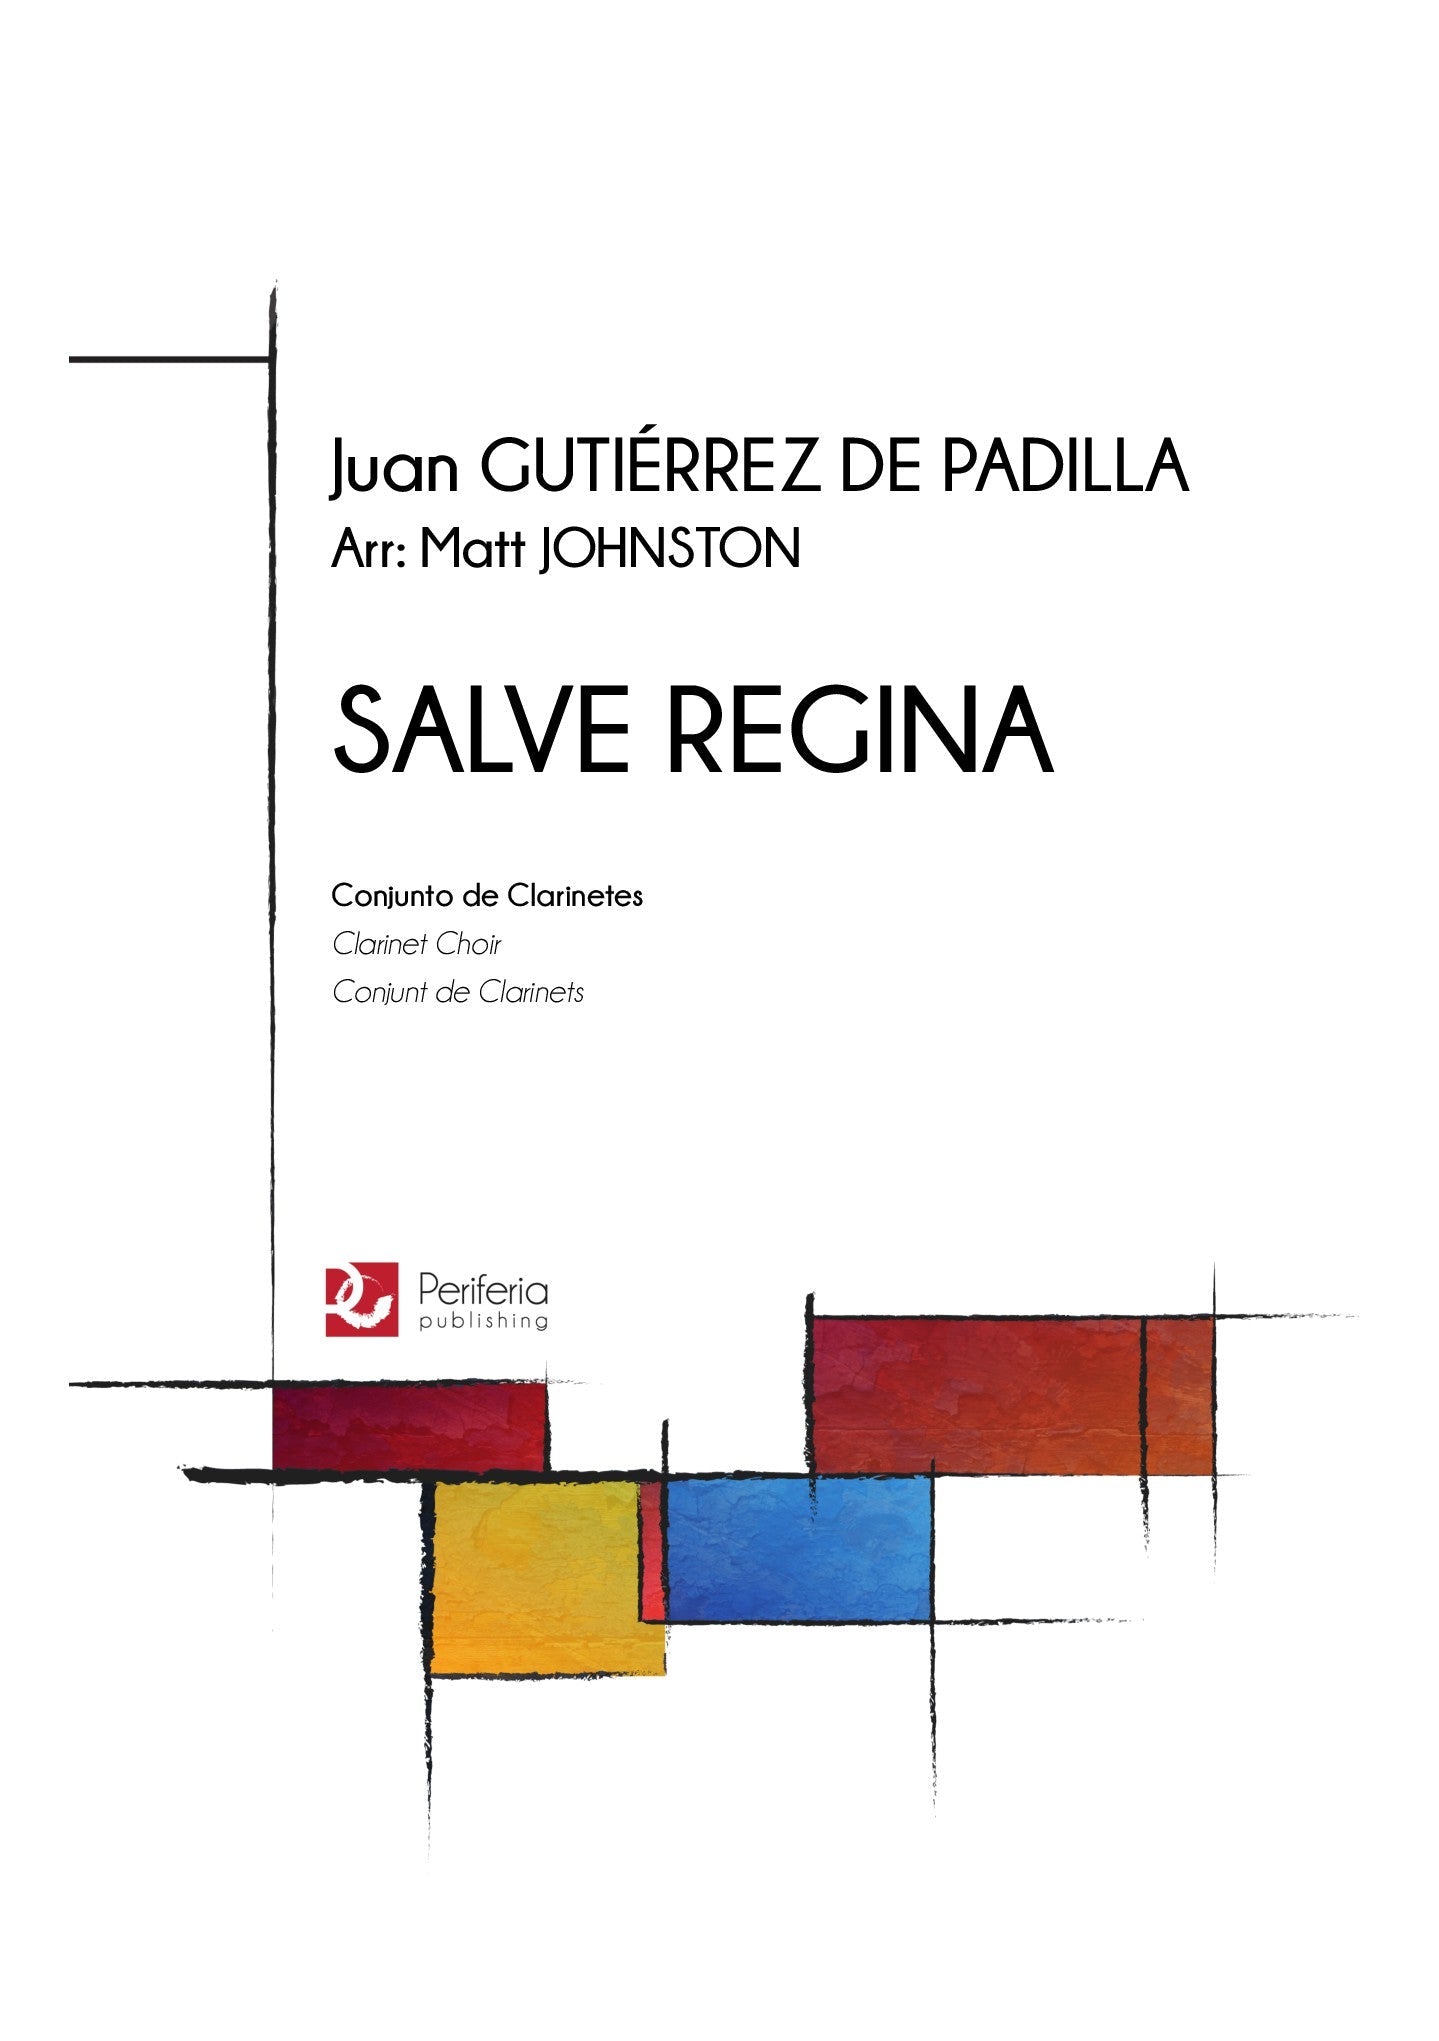 Gutierrez de Padilla (arr. Matt Johnston) - Salve Regina for Clarinet Choir